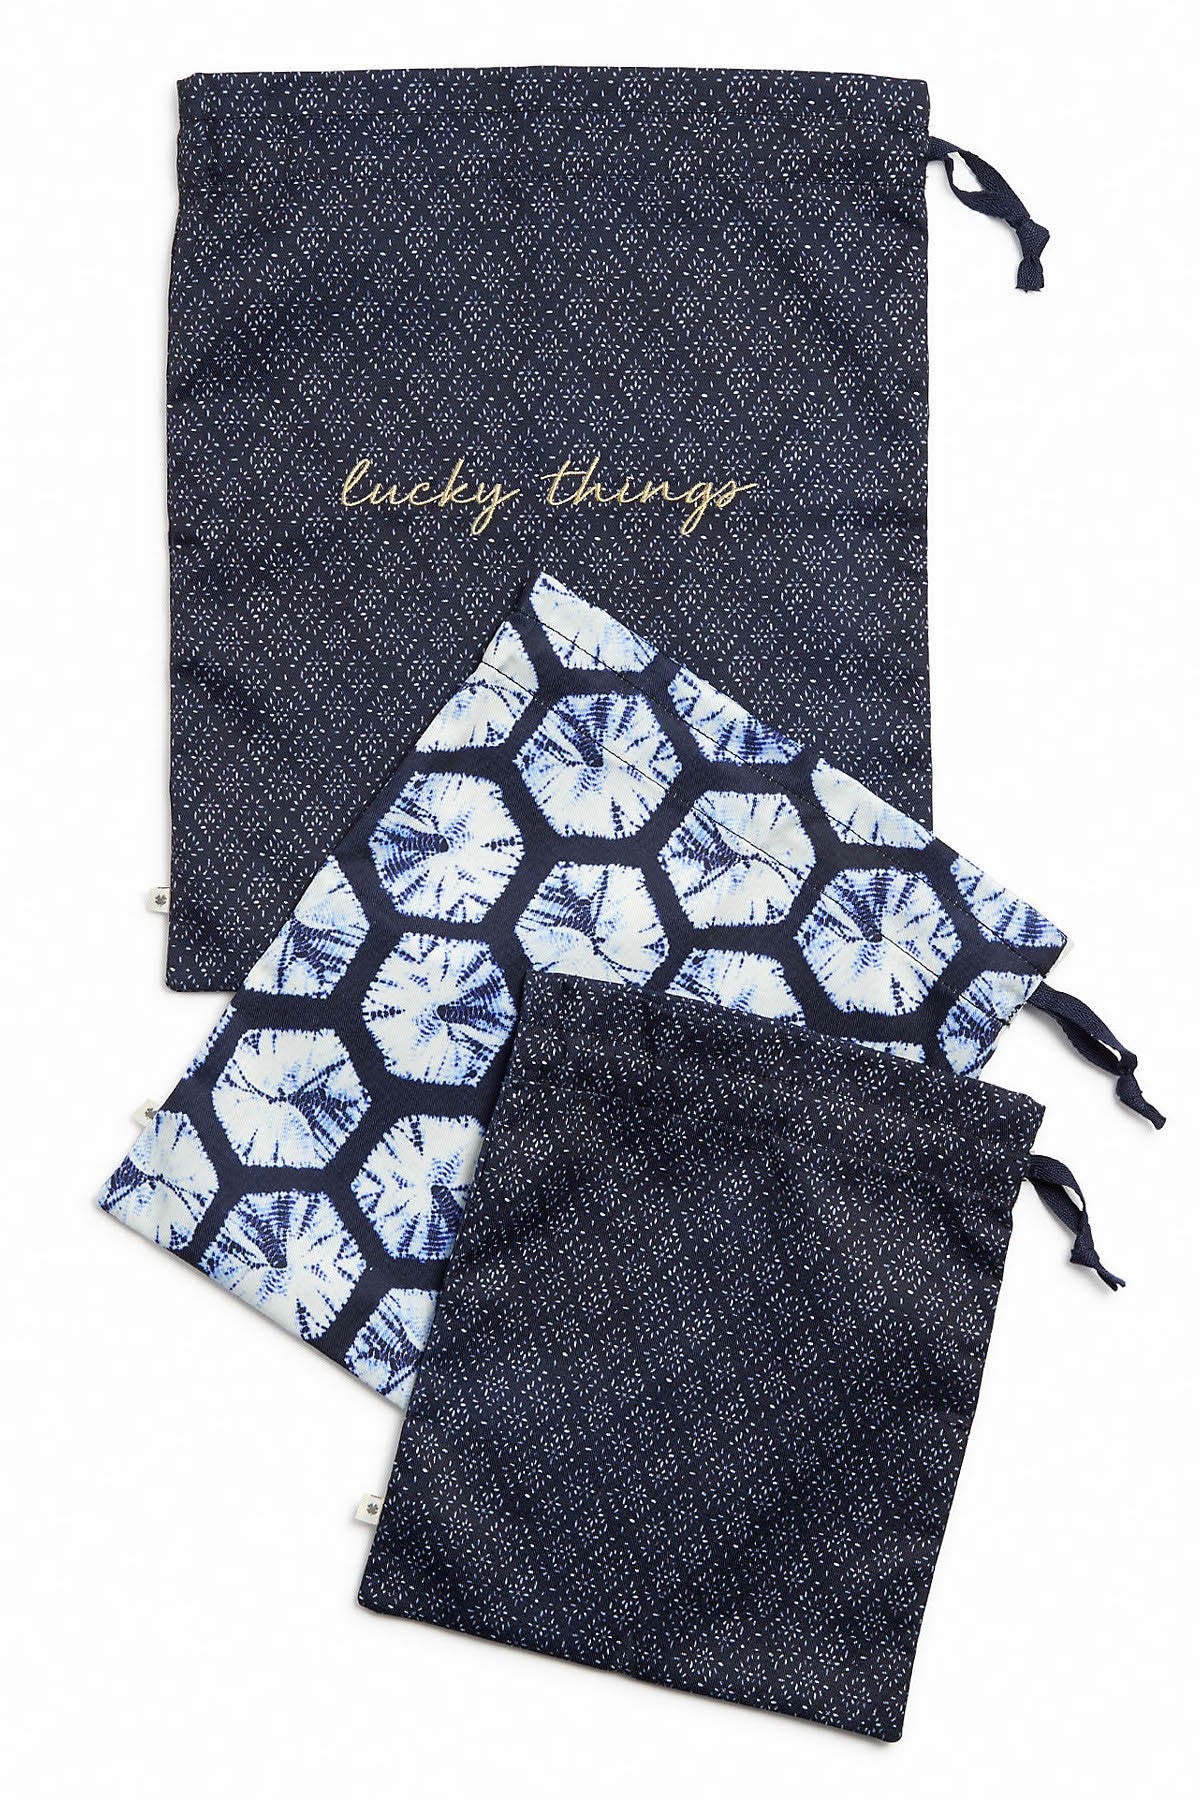 Lucky Brand Indigo-Dye Laundry Bag 3-Piece Set